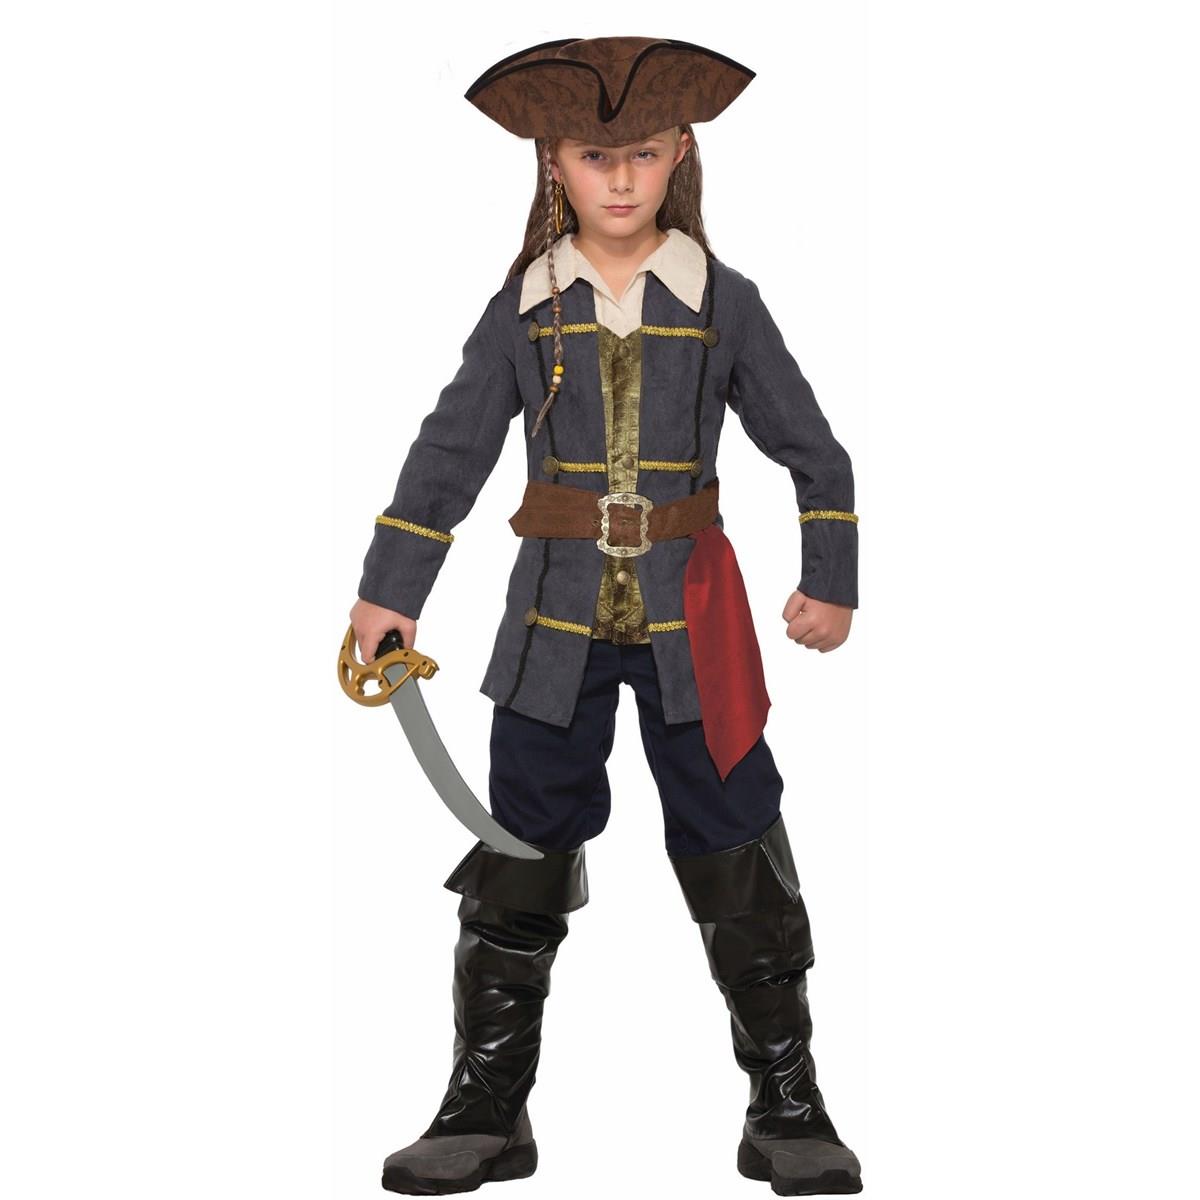 Picture of Forum Novelties 277305 Halloween Boys Captain Cutlass Pirate Costume - Small